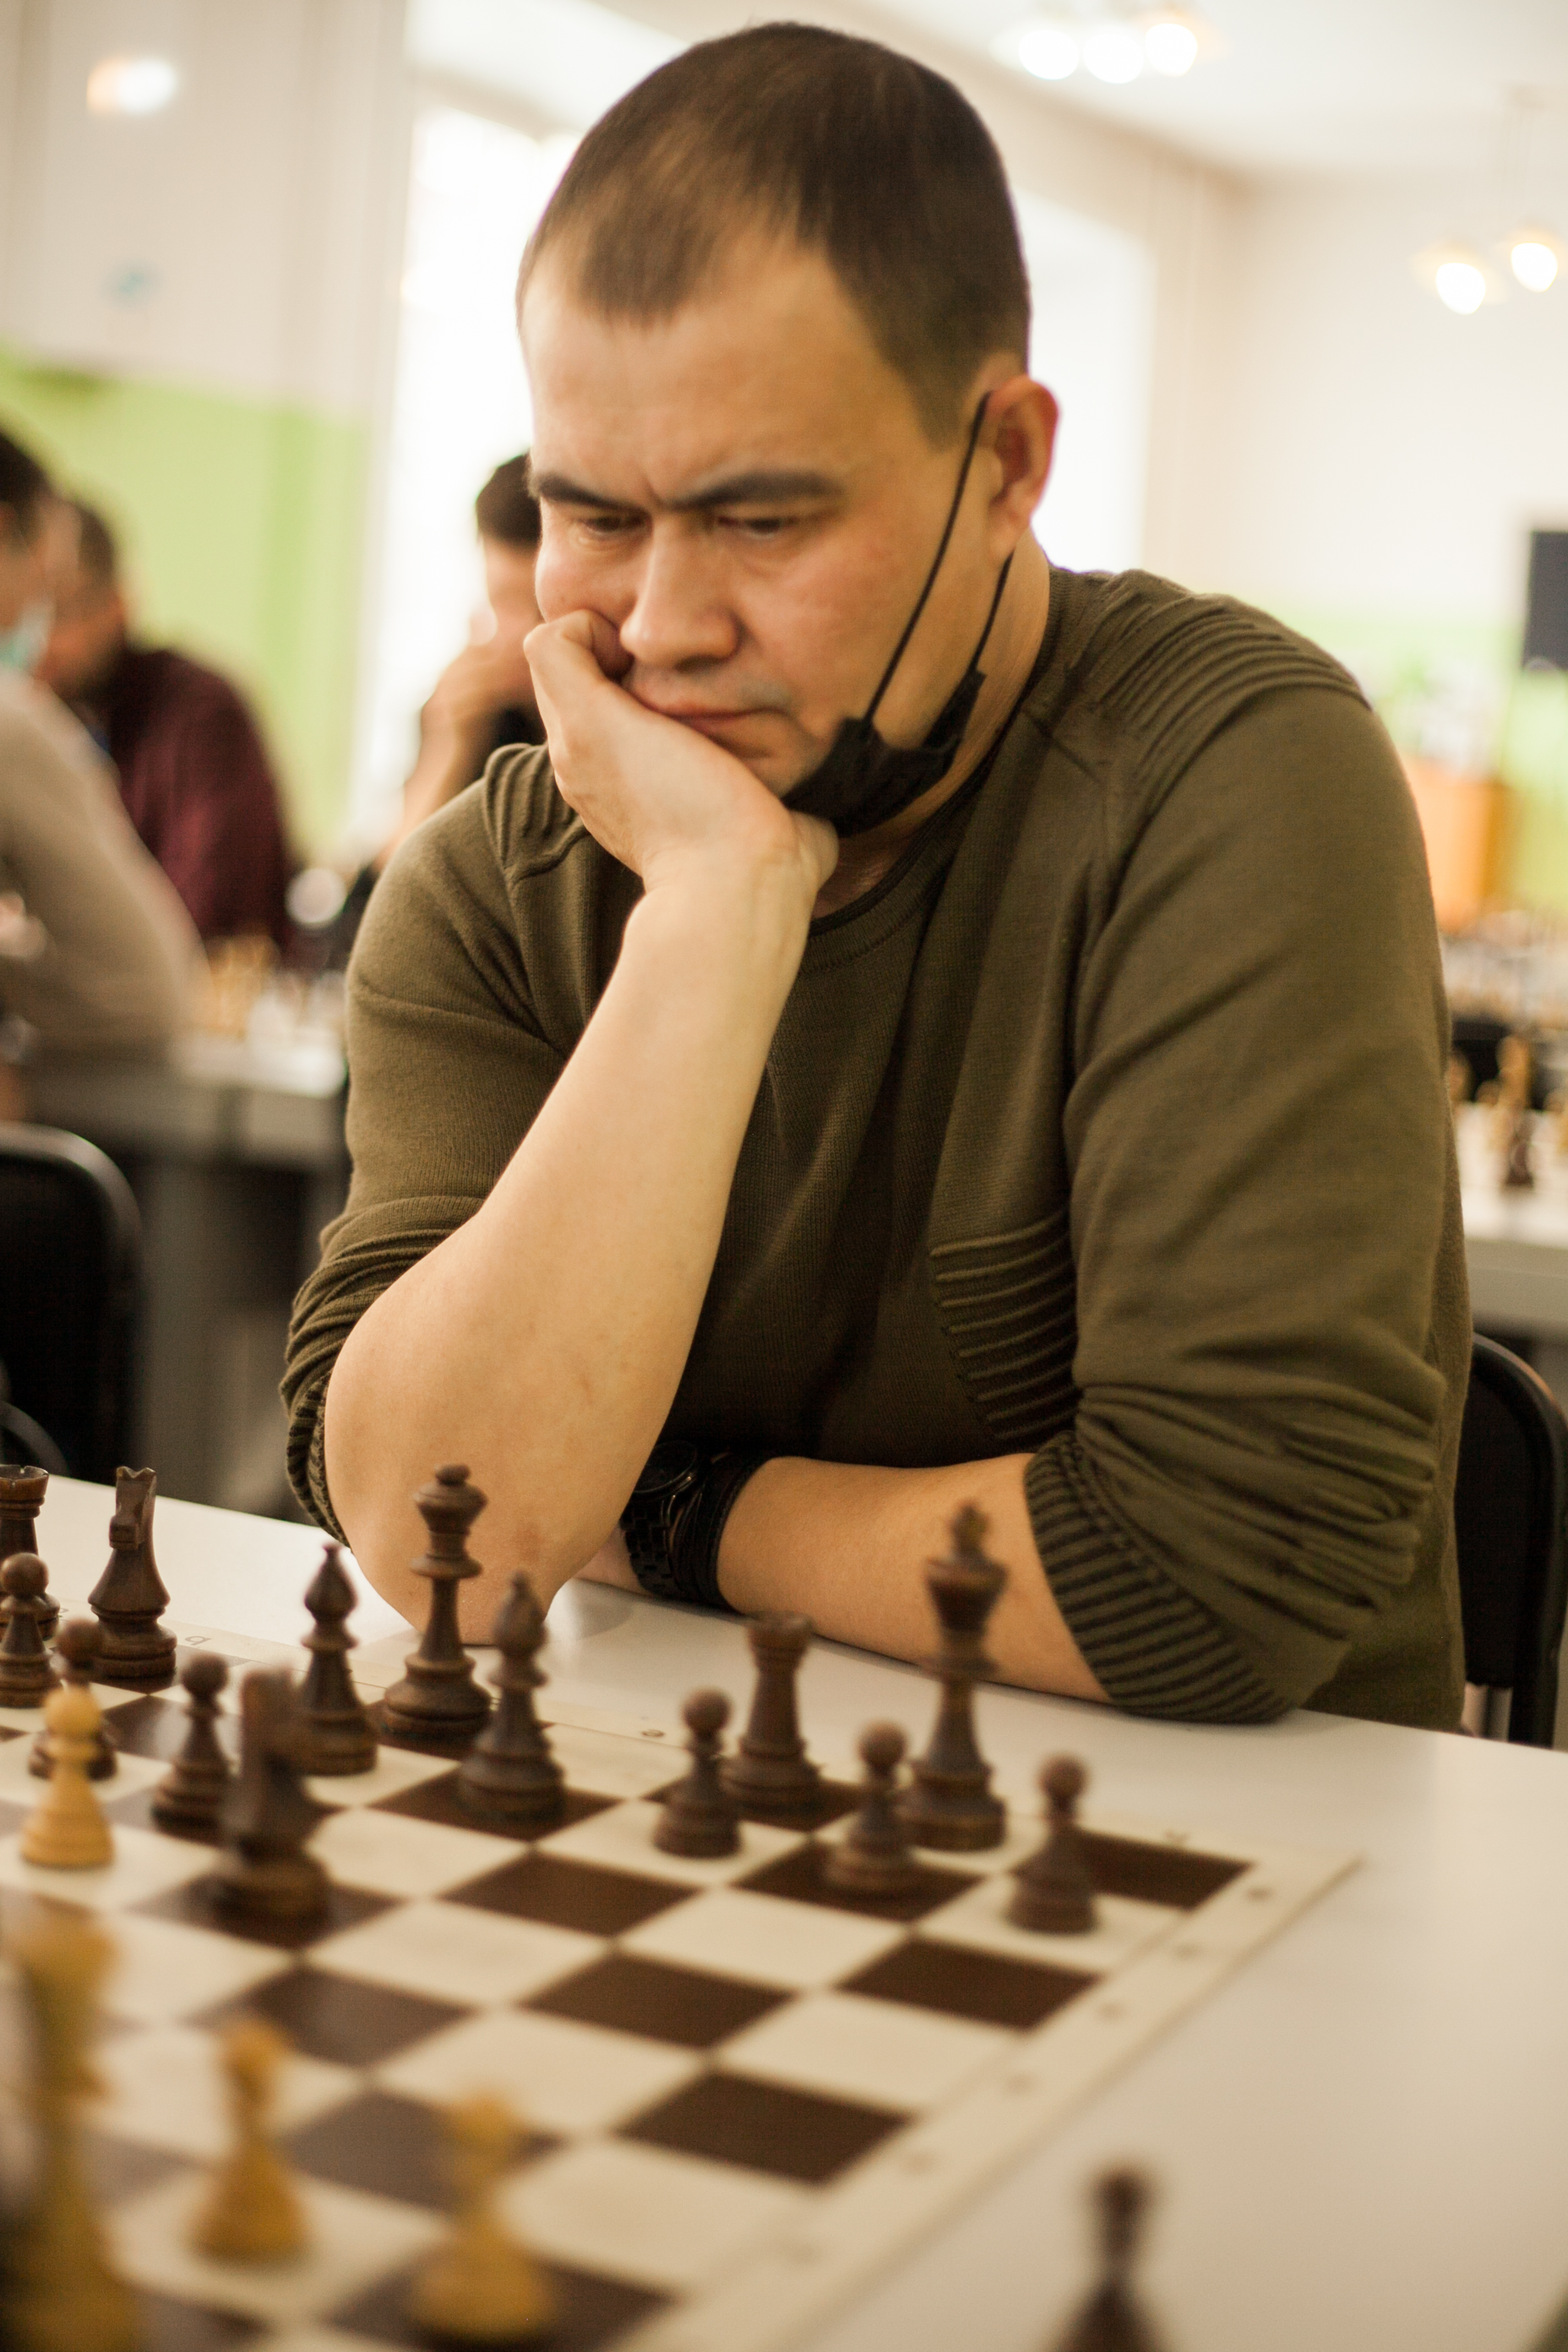 З сиб. Шахматы 12 на 12. Фахим шахматист сейчас. Чемпион Франции по шахматам 2012 до 12 лет.